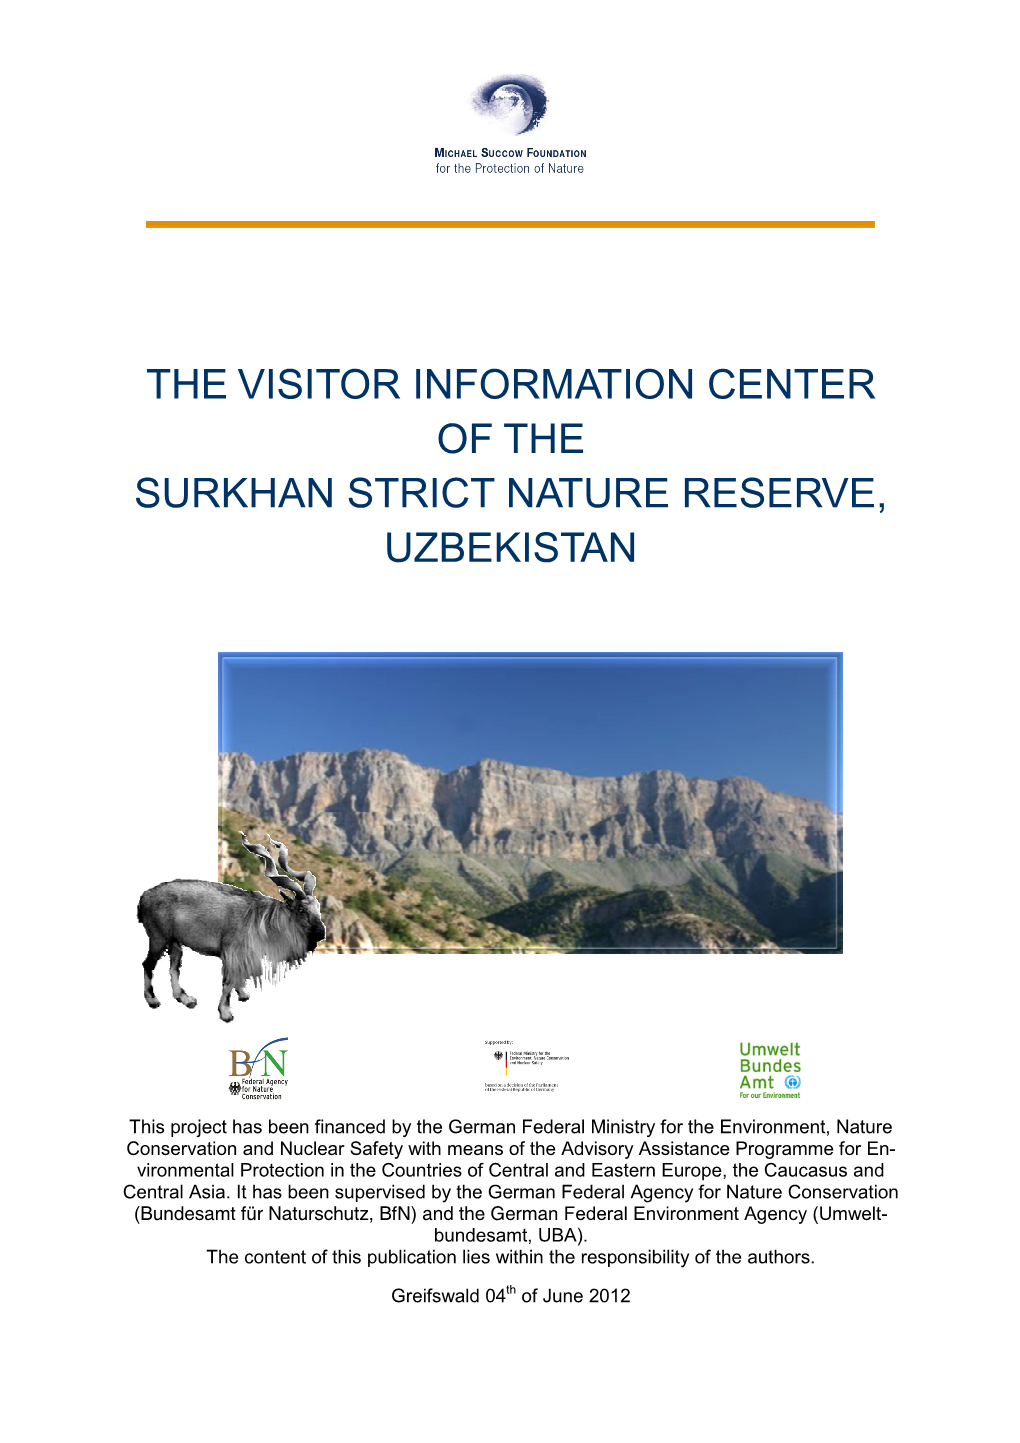 The Visitor Information Center of the Surkhan Strict Nature Reserve, Uzbekistan